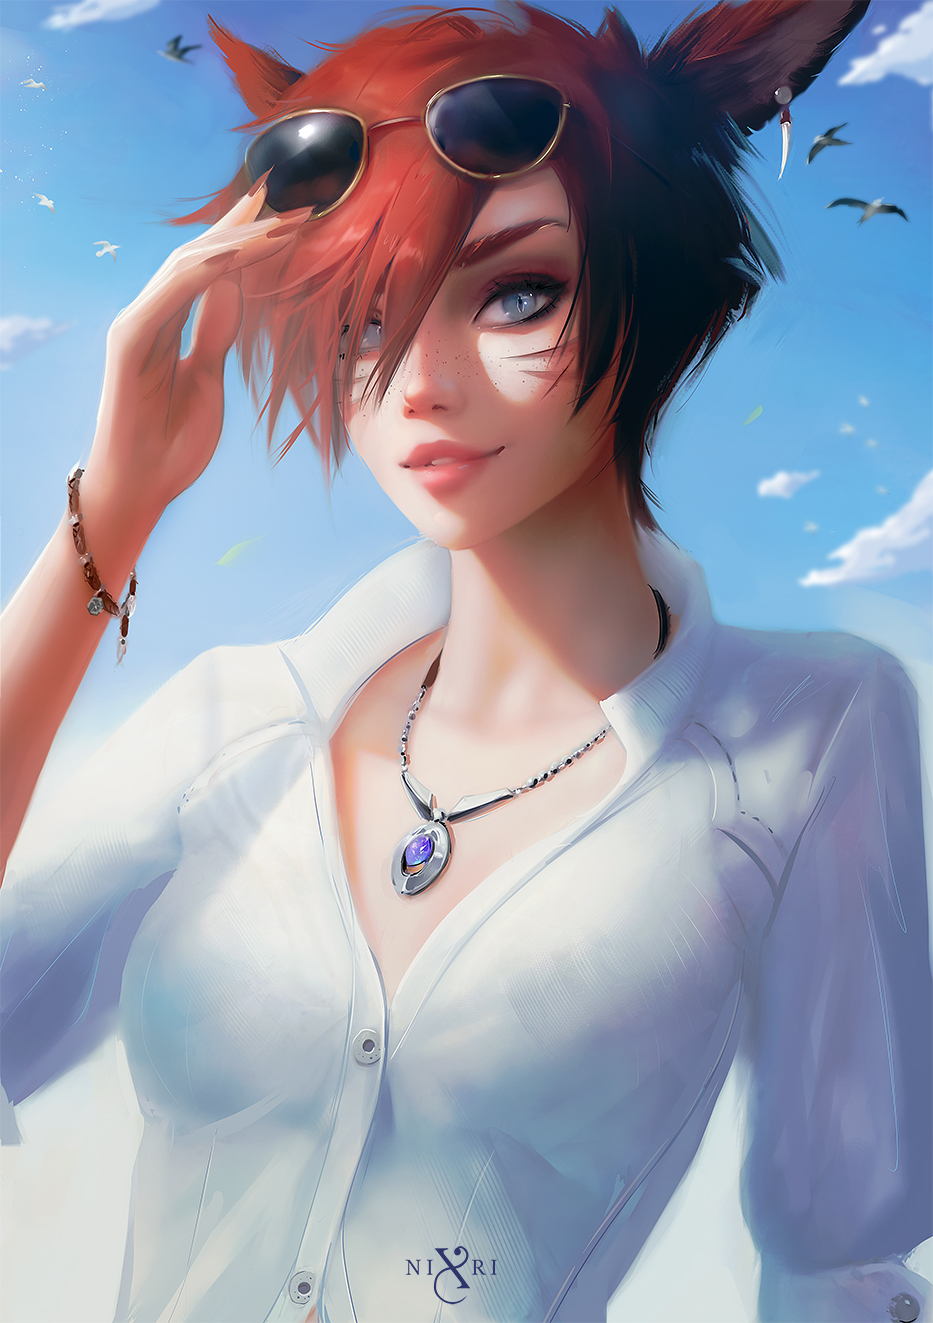 General 933x1323 Nixri drawing women Final Fantasy redhead sunglasses bangs face paint shirt necklace sky